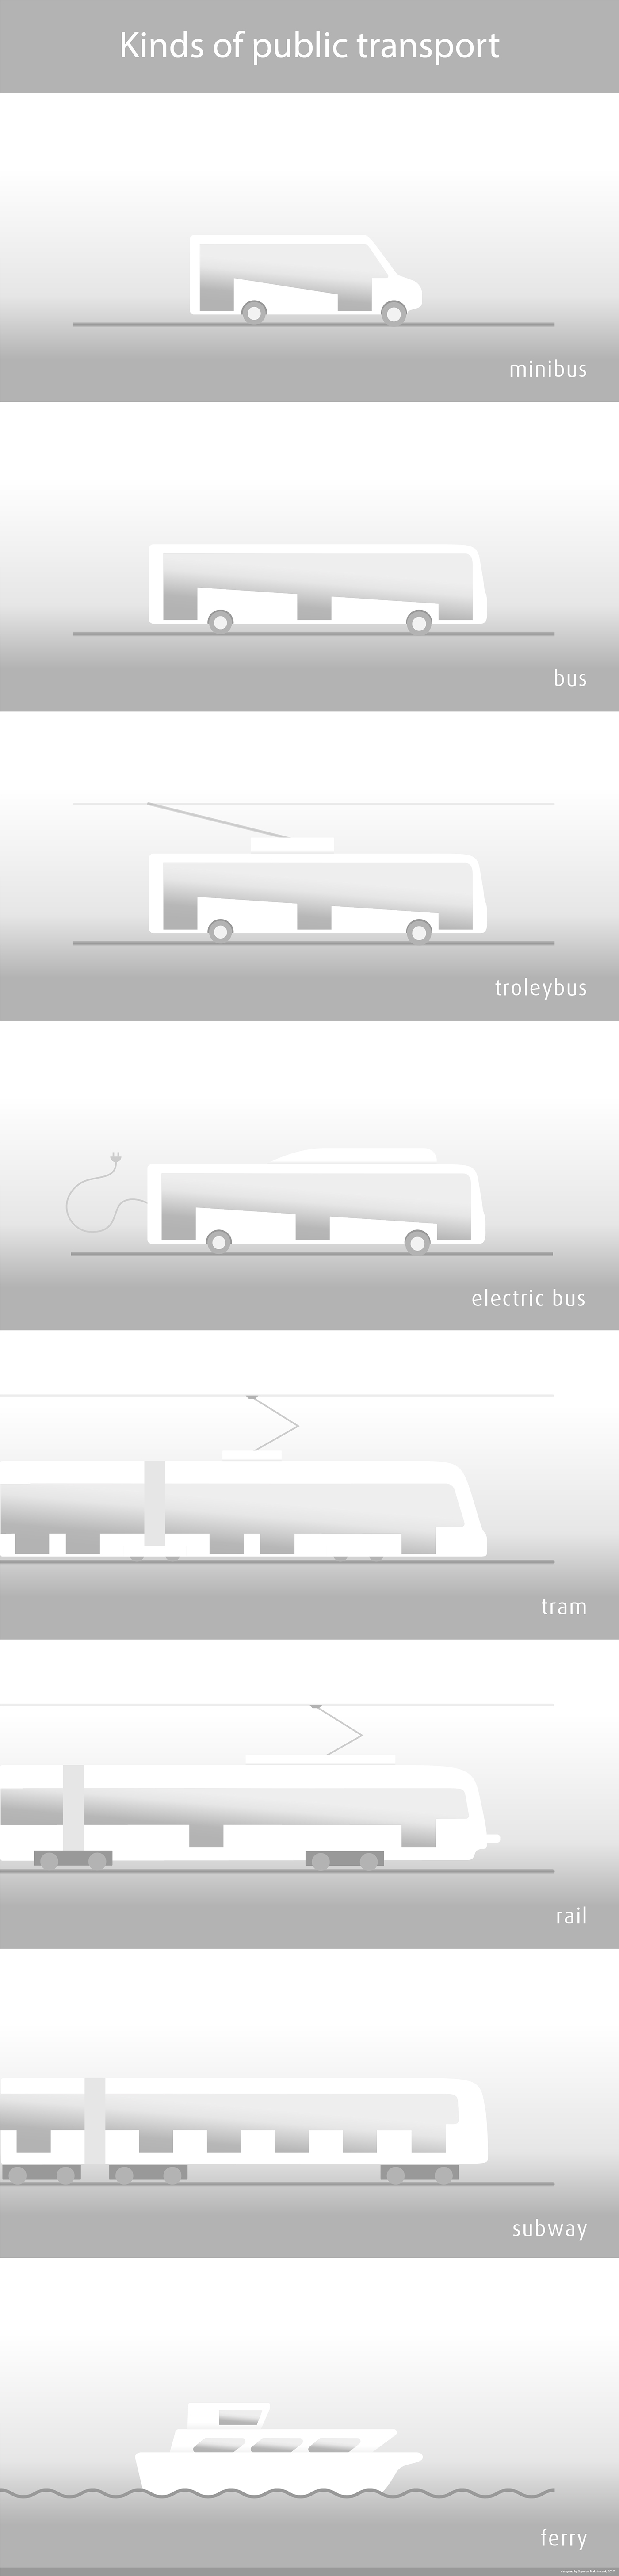 public transport bus tram subway rail ferry minibus electric